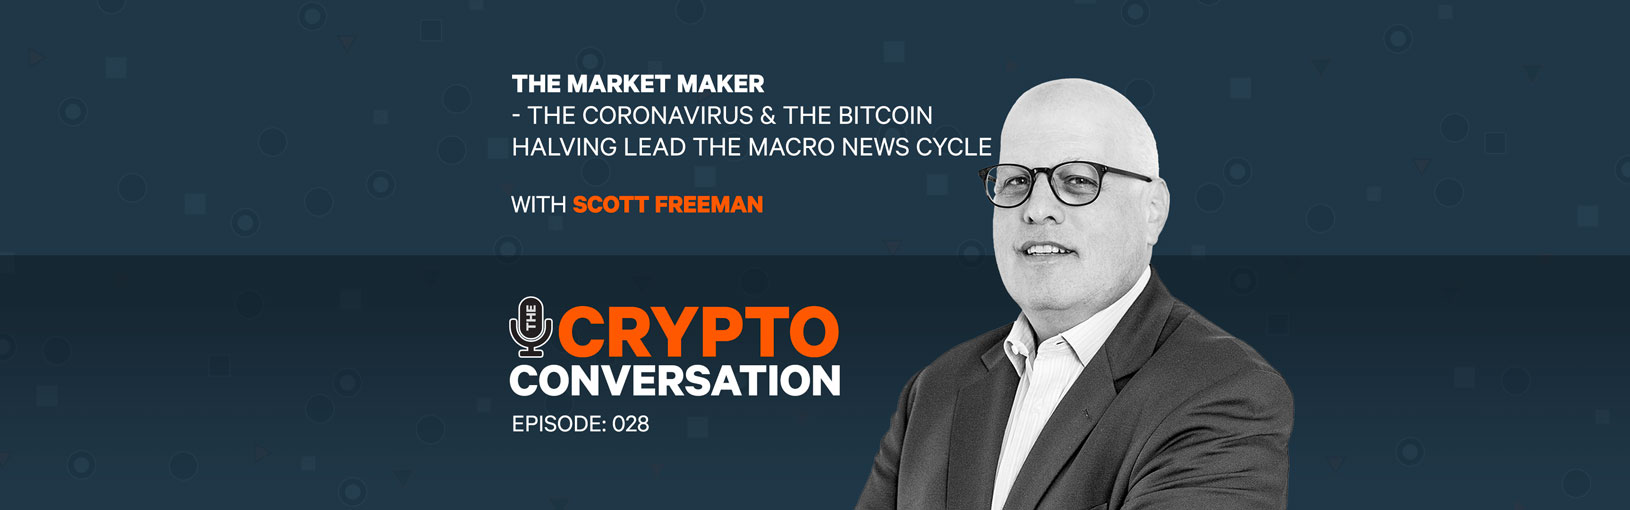 The Market Maker – The Coronavirus & the Bitcoin halving lead the macro news cycle